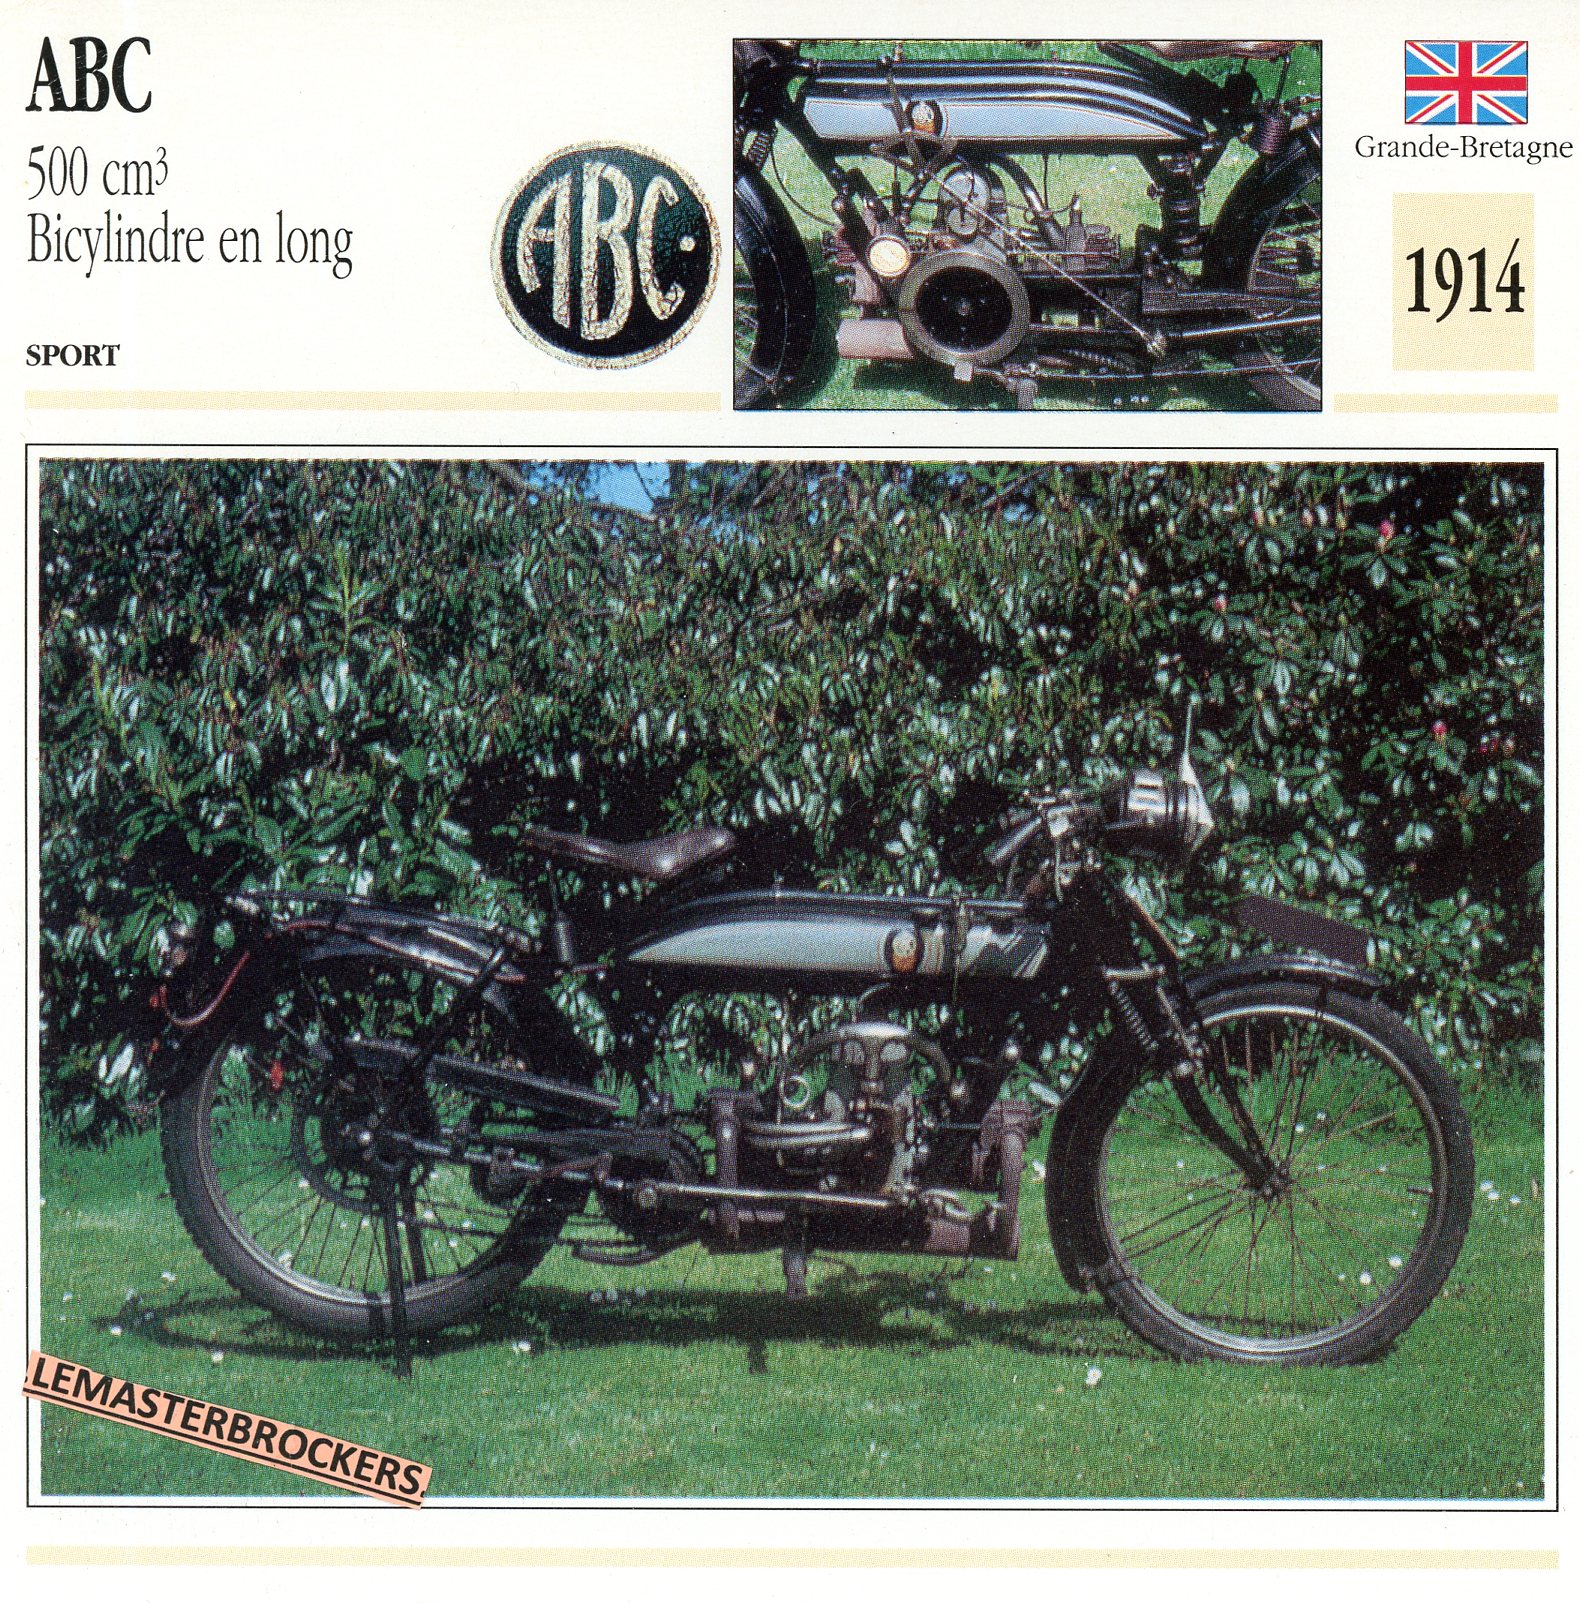 ABC-500-1914-FICHE-MOTO-ATLAS-lemasterbrockers